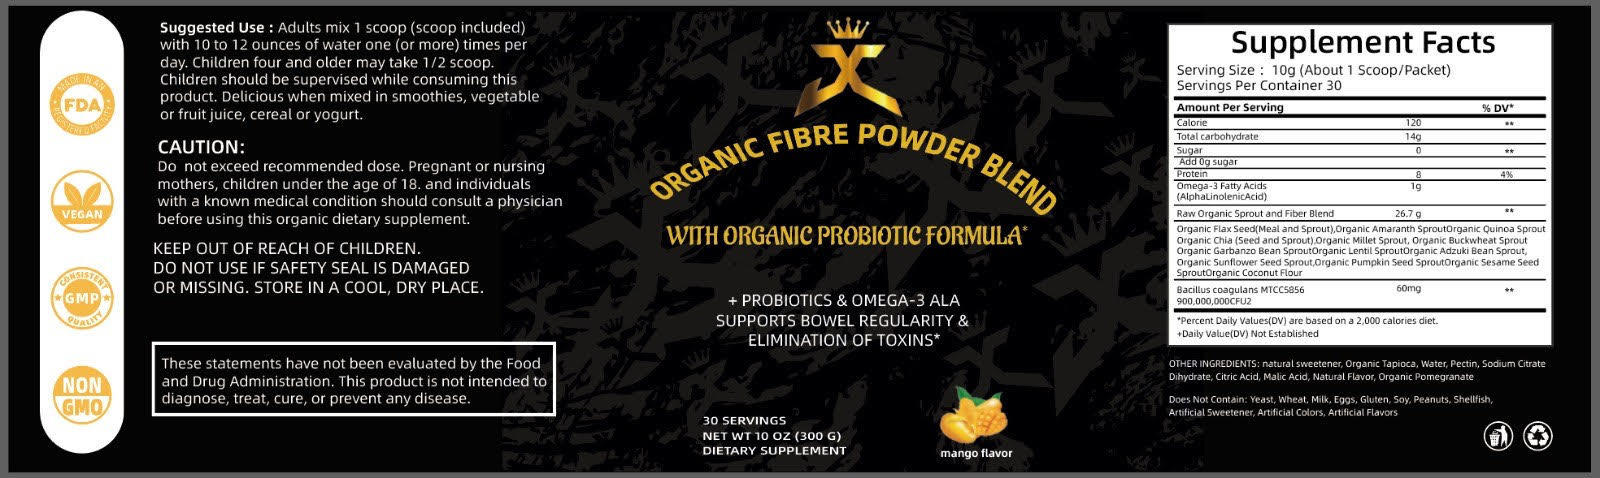 Organic Fibre Powder Blend